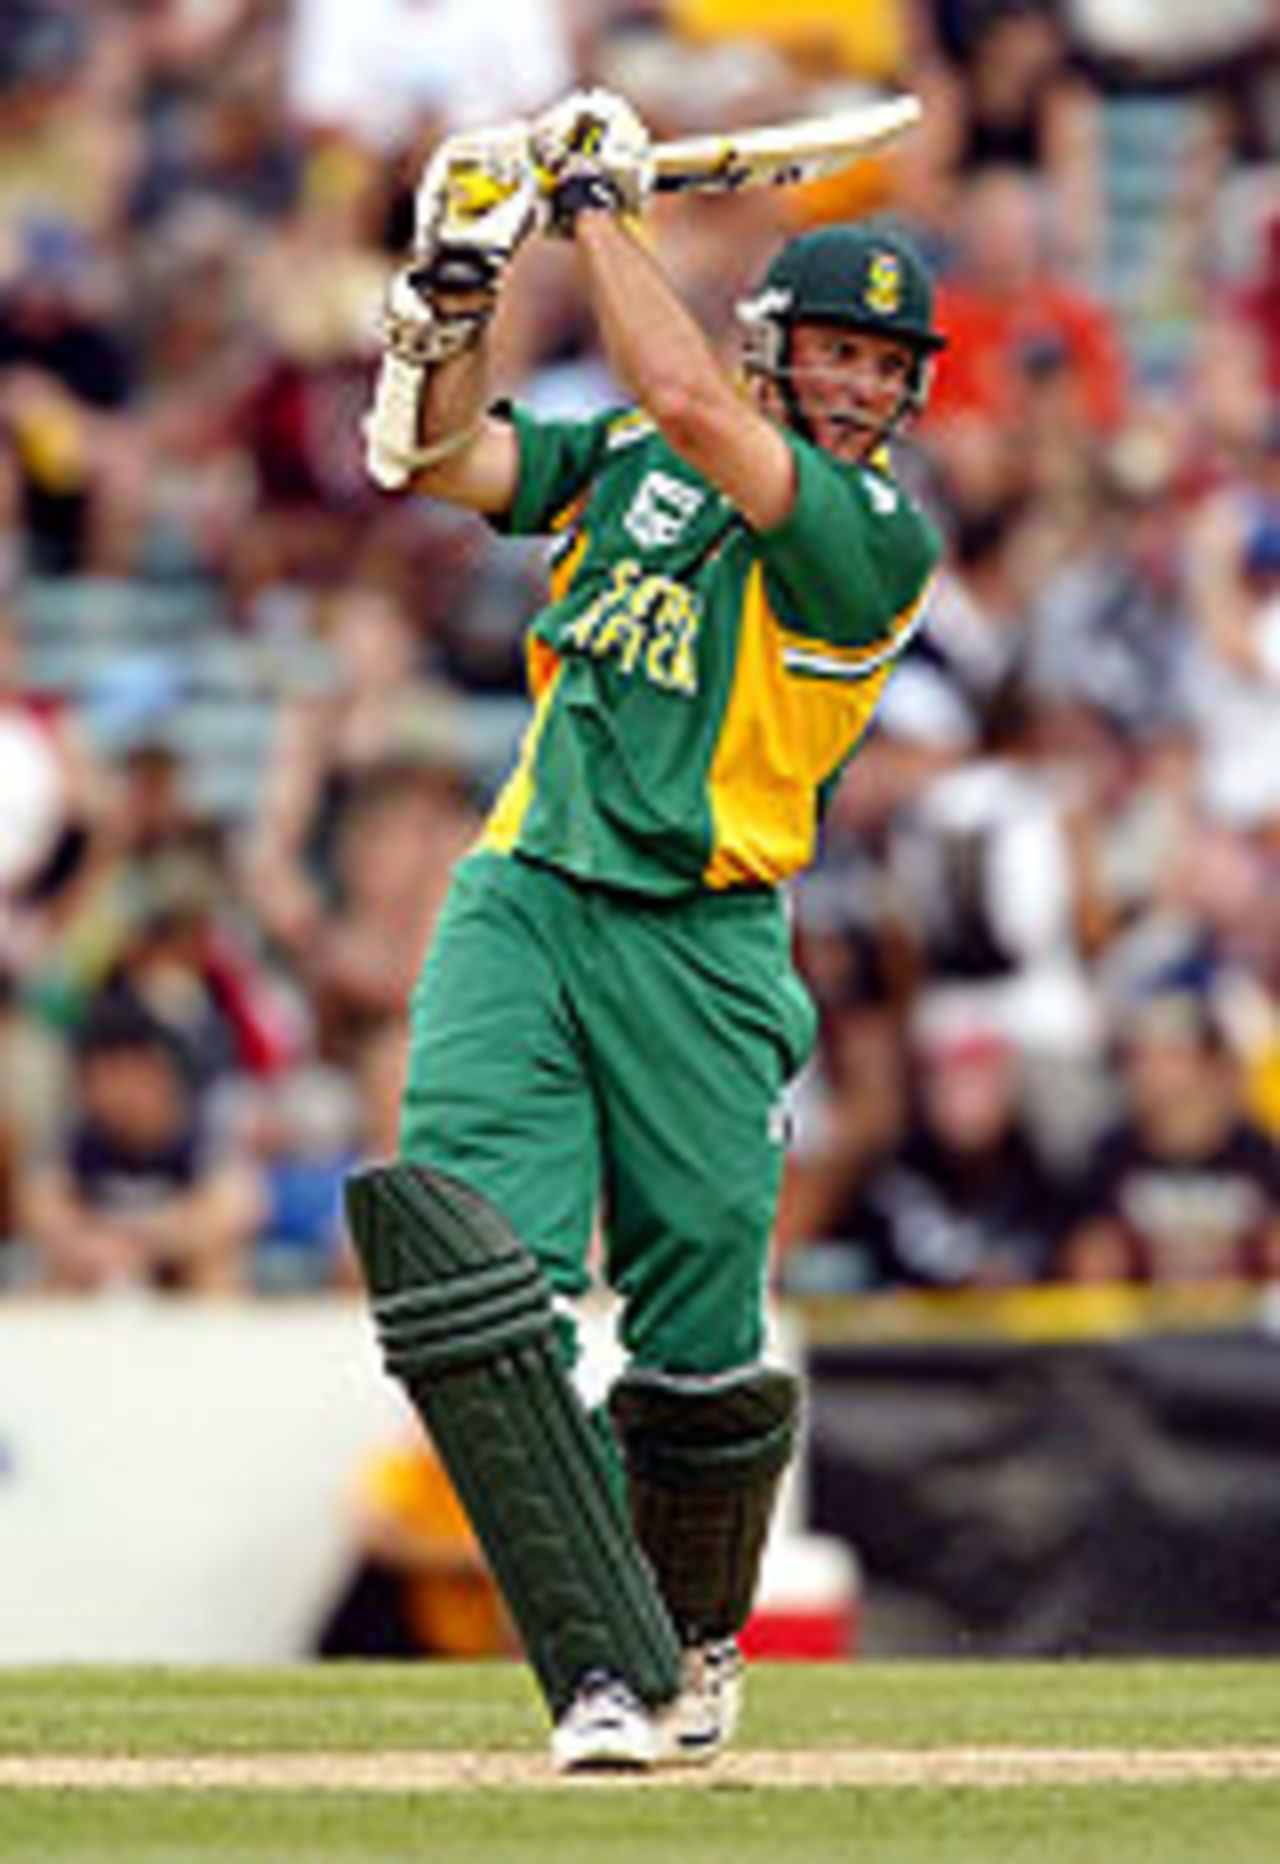 Graeme Smith drives, New Zealand v South Africa, 1st ODI, 2003-04